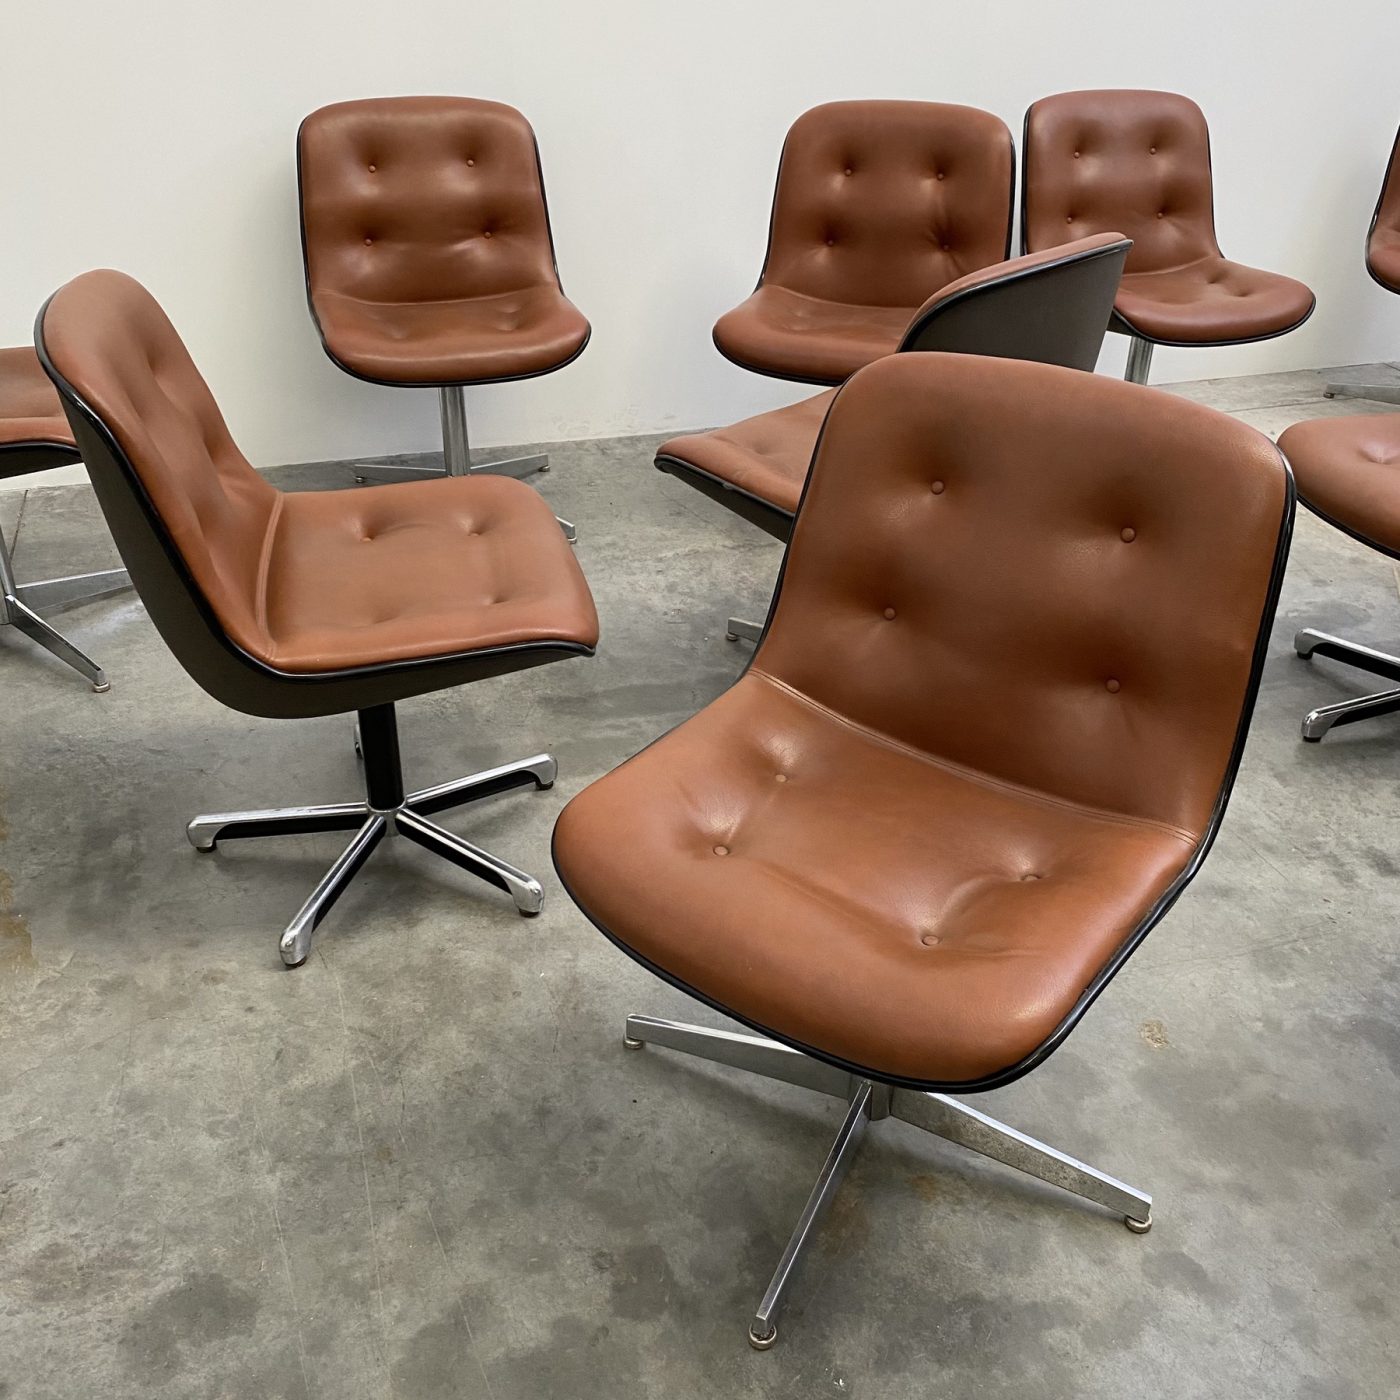 objet-vagabond-vintage-chairs0001